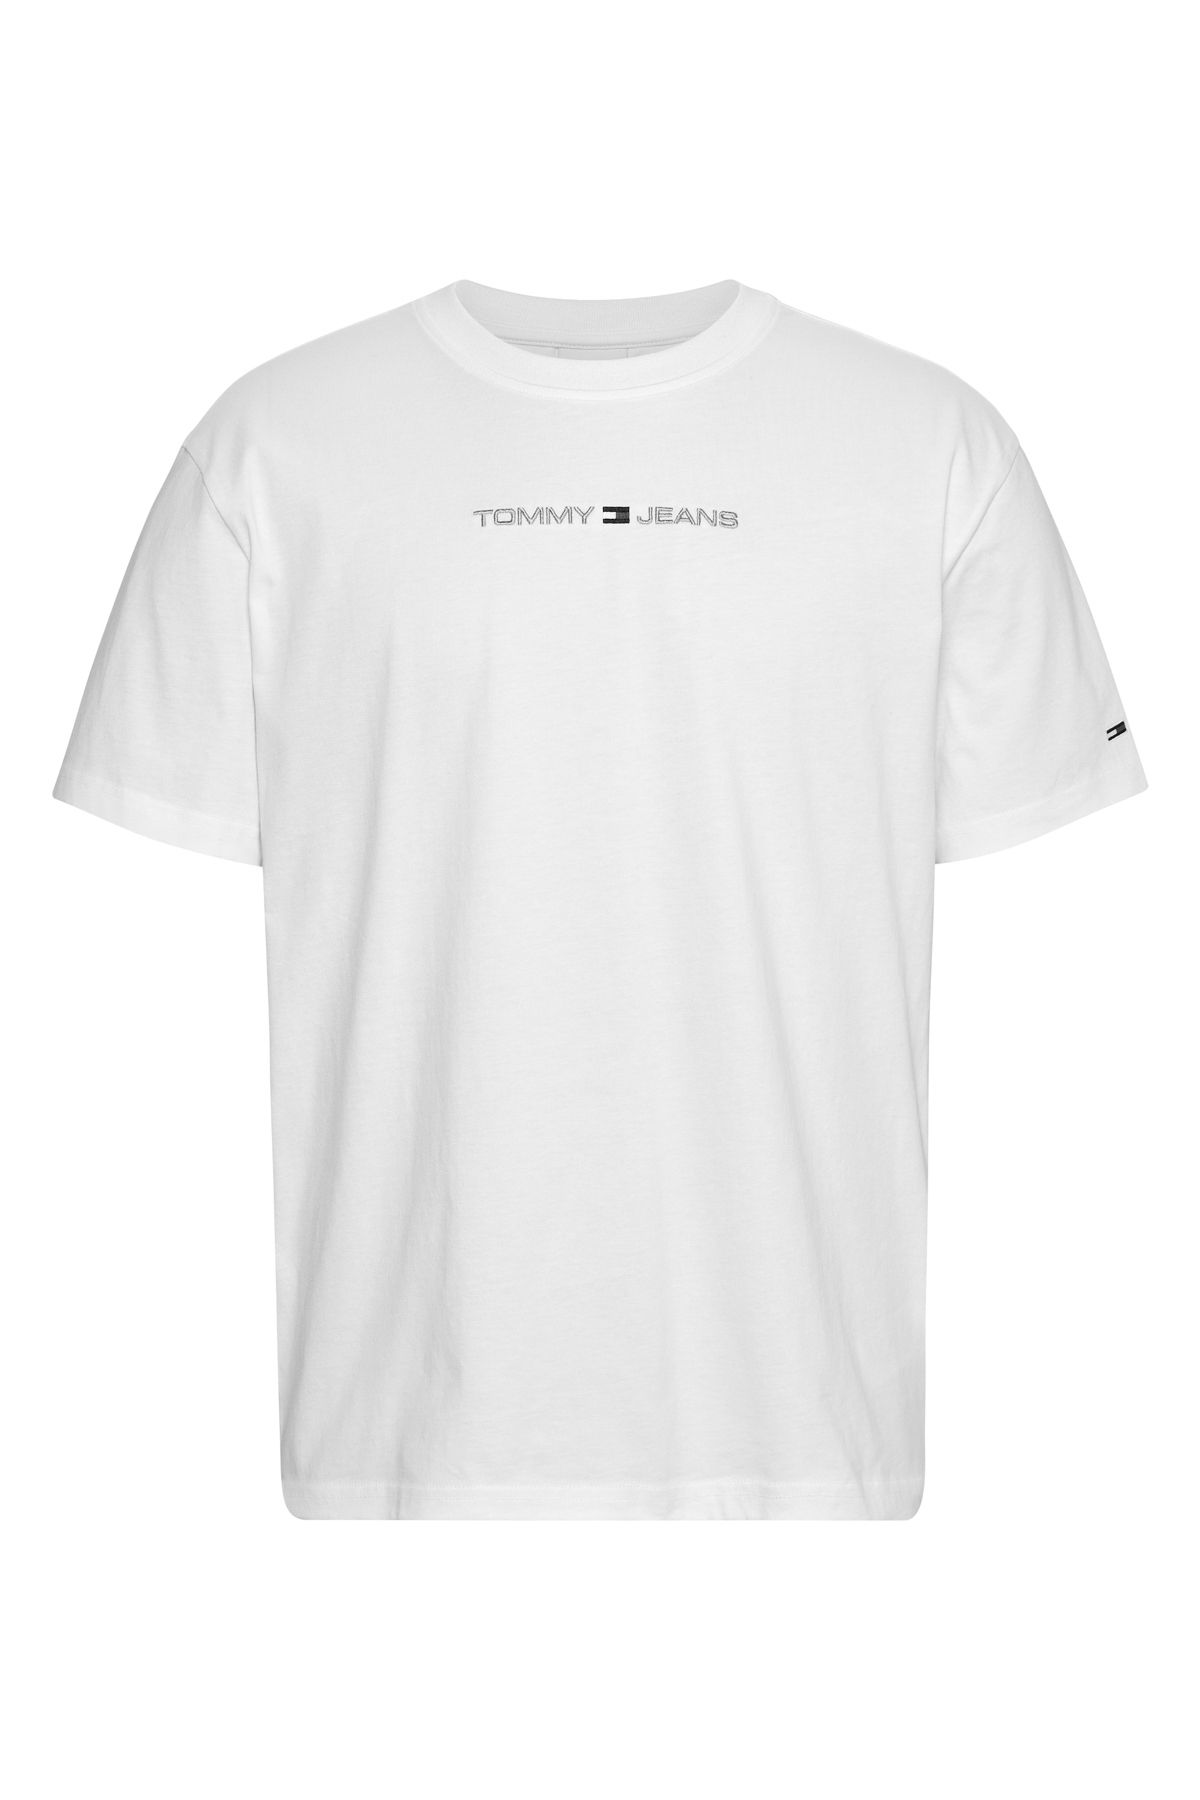 Tommy Hilfiger T-Shirt Erkek White Fiyatı, Yorumları - Trendyol